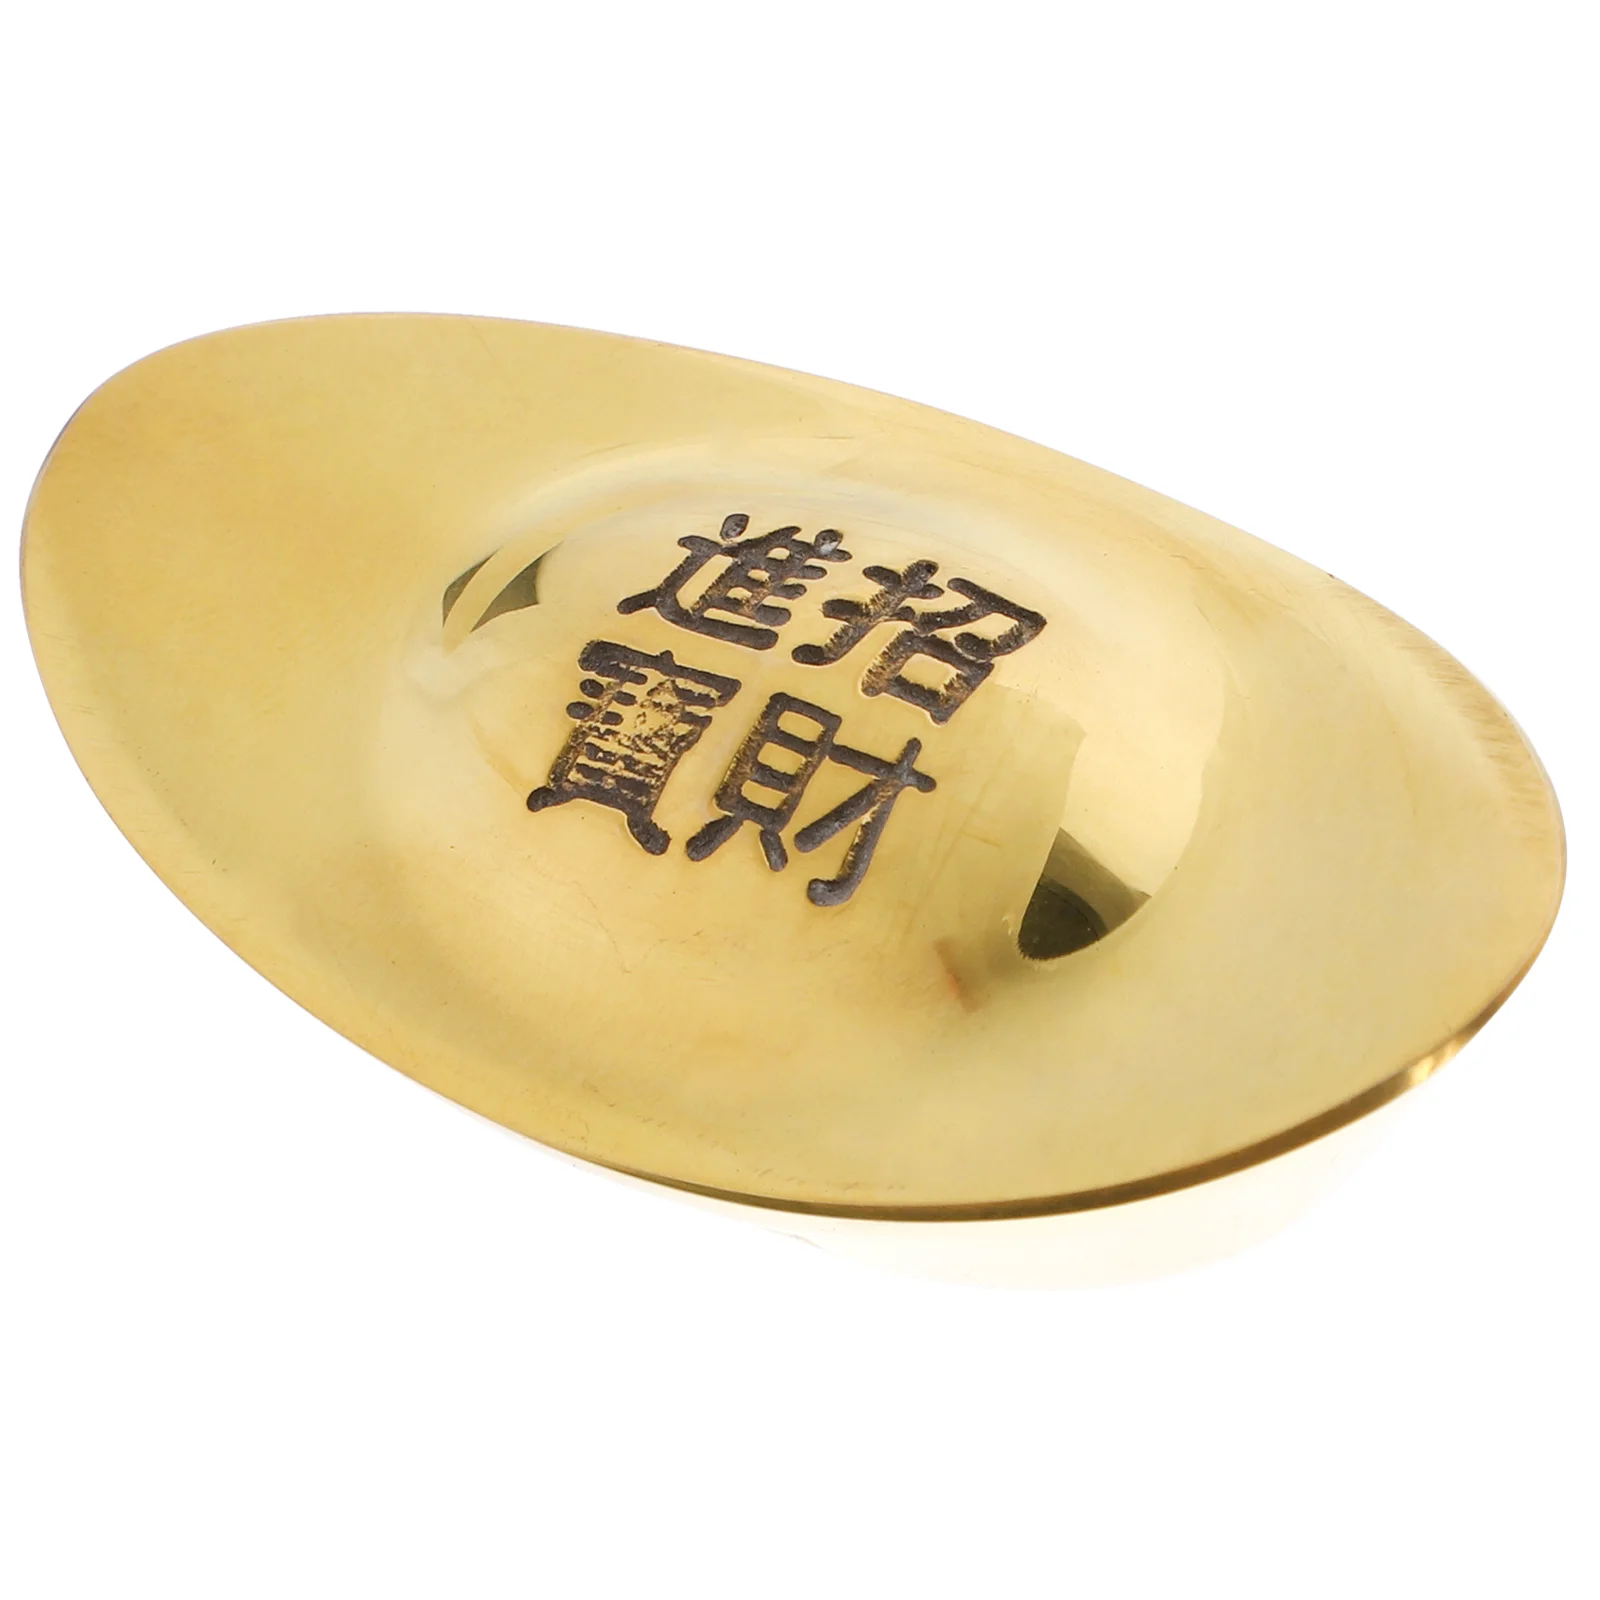 

Chinese Brass Ingot Statue Paperweight Calligraphy Golden Luck Fengshui Figurine Money Fortune Lucky Ornament Desktop Sculpture